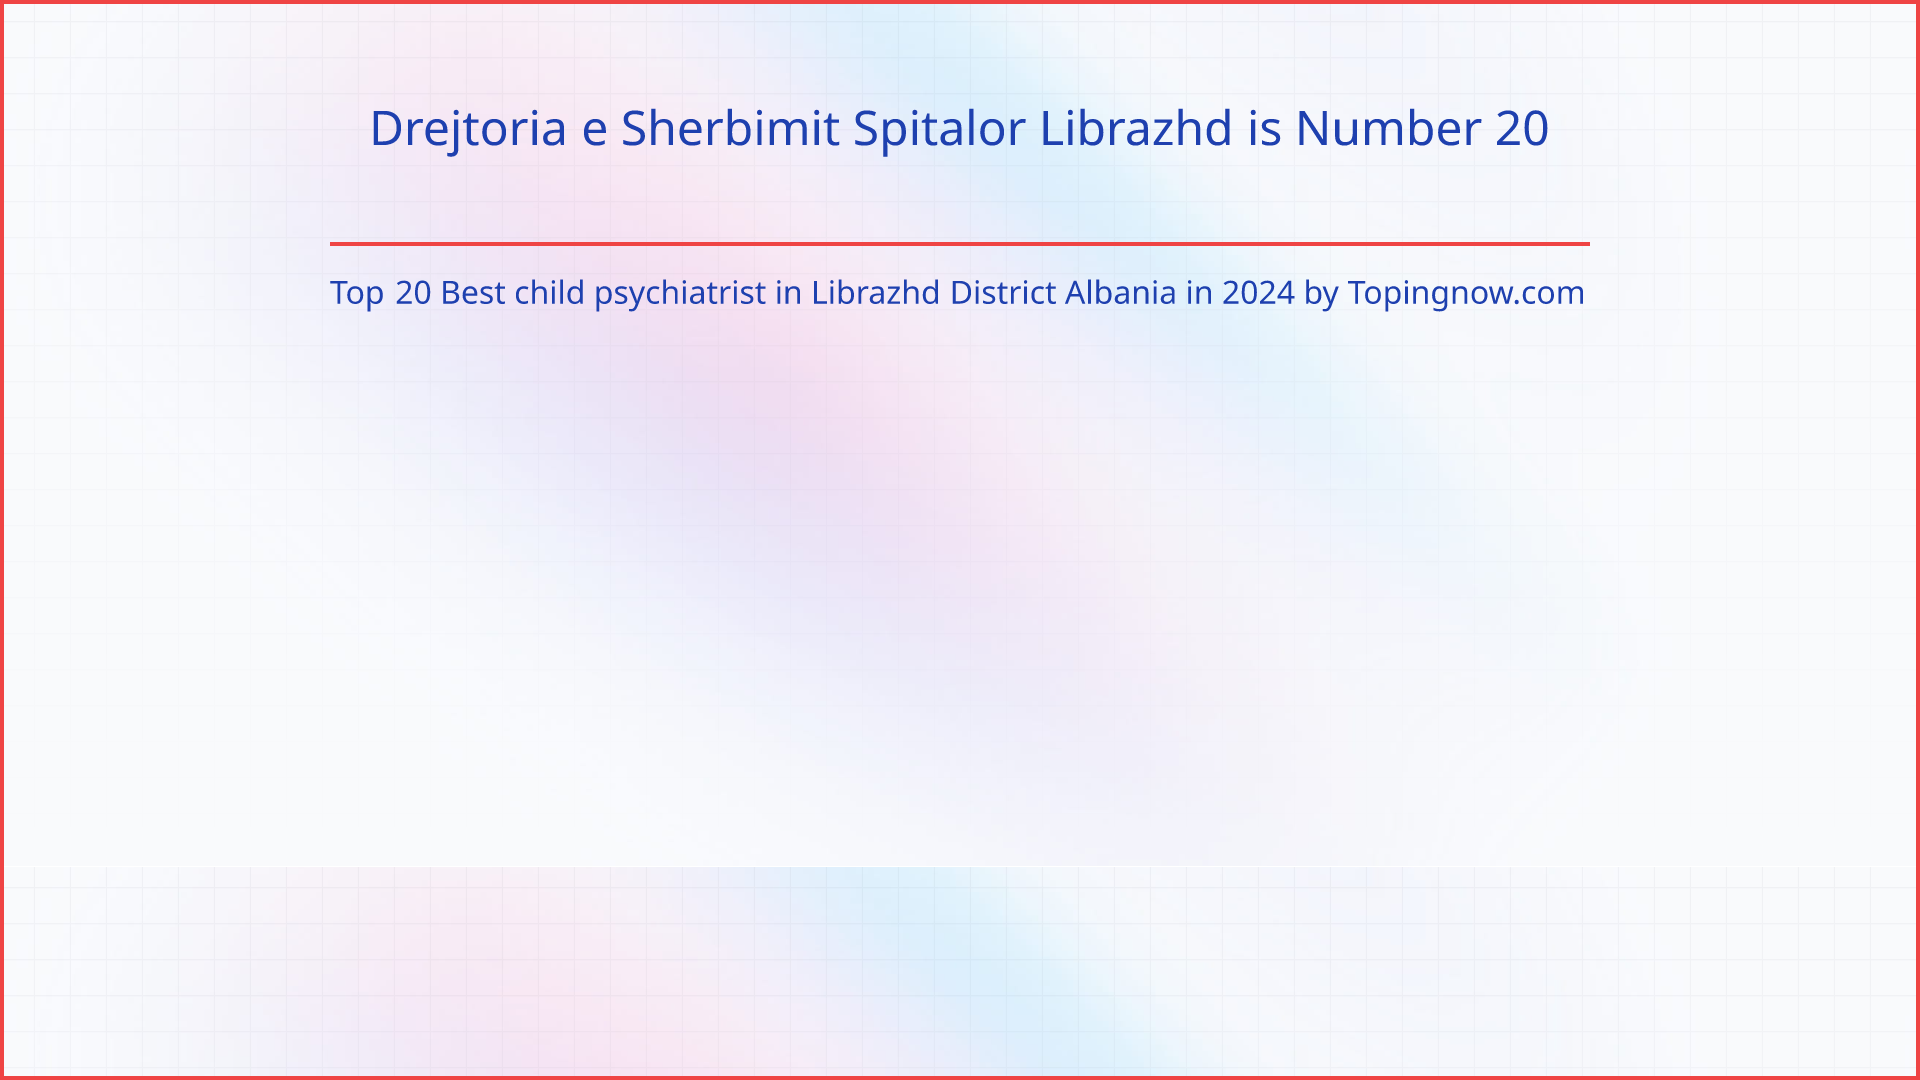 Drejtoria e Sherbimit Spitalor Librazhd: Top 20 Best child psychiatrist in Librazhd District Albania in 2024